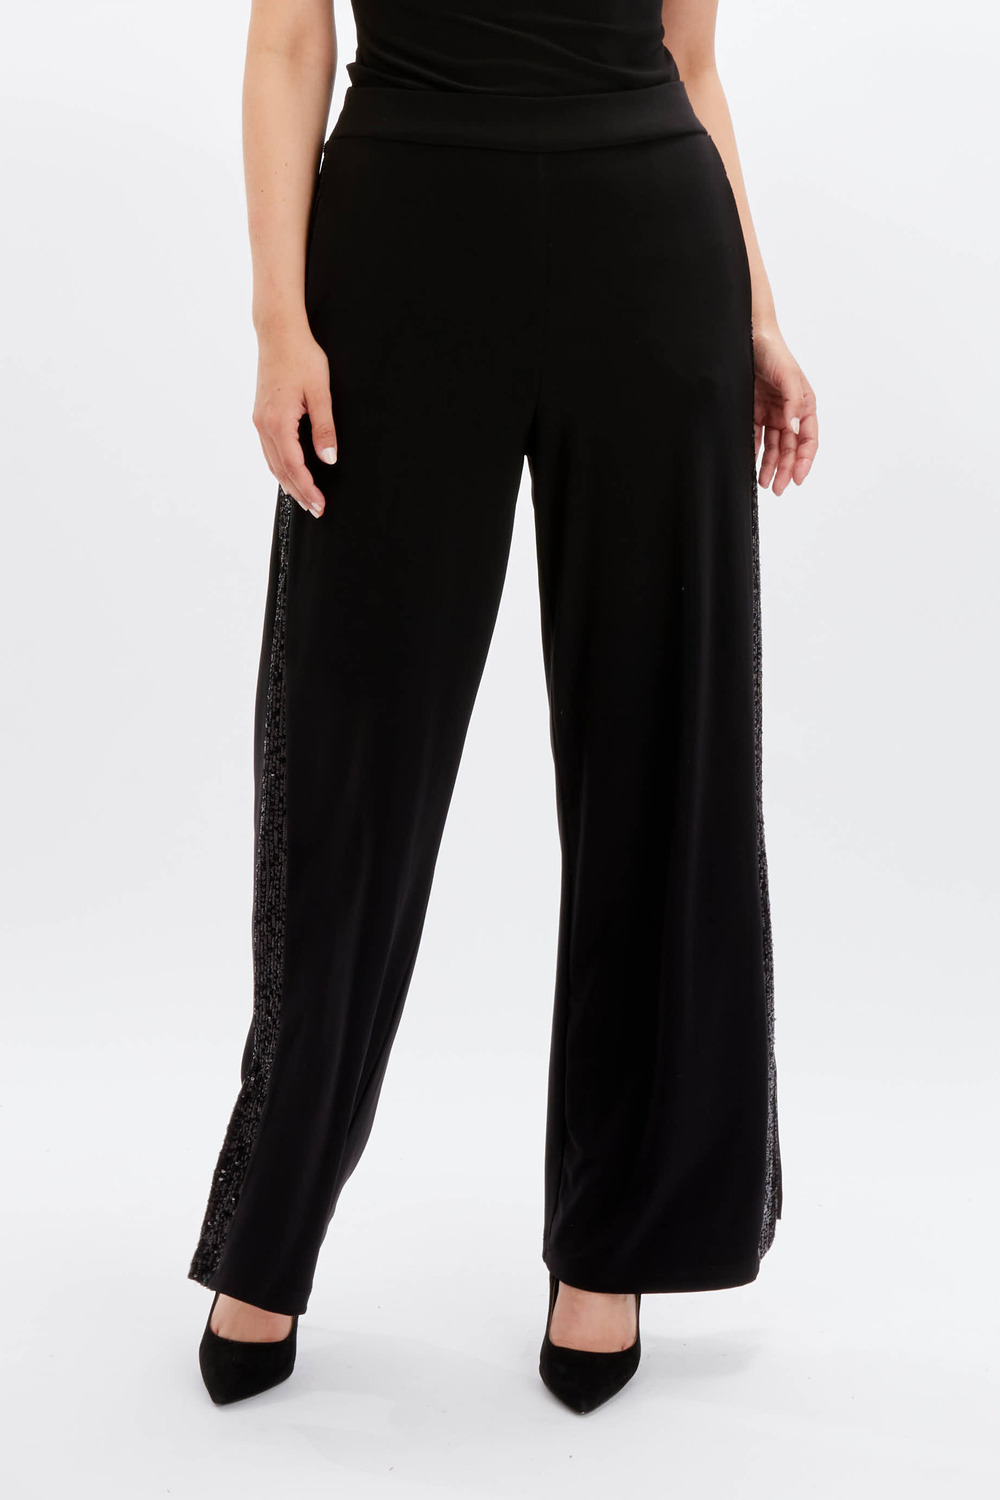 Sequin Cuff Pants Style 234282. Black